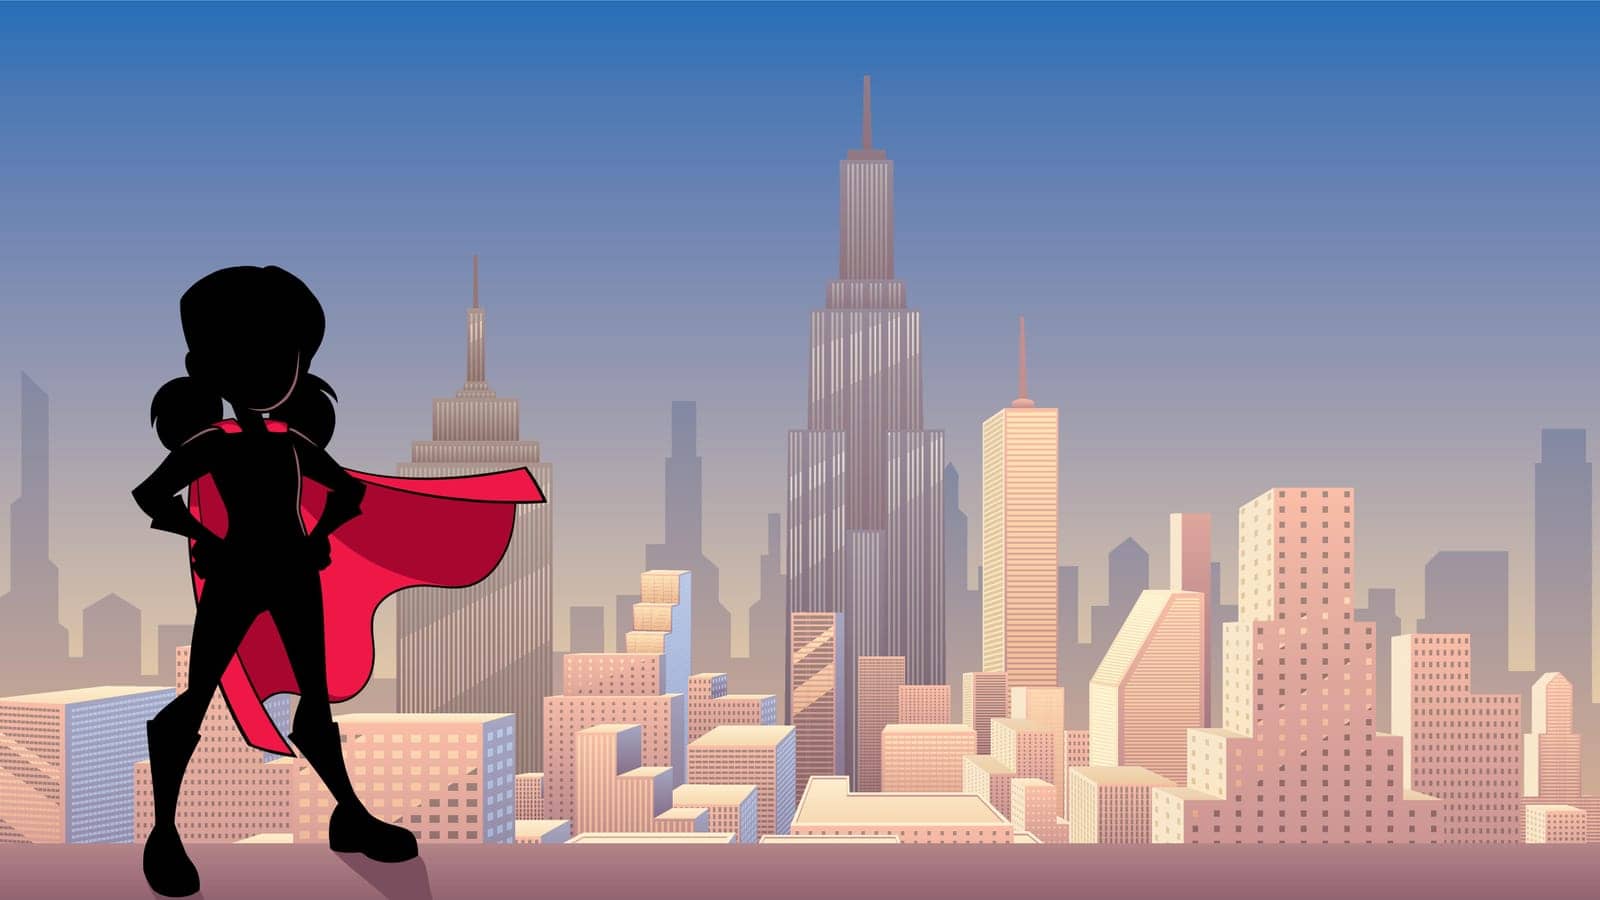 Super Girl City Silhouette by Malchev